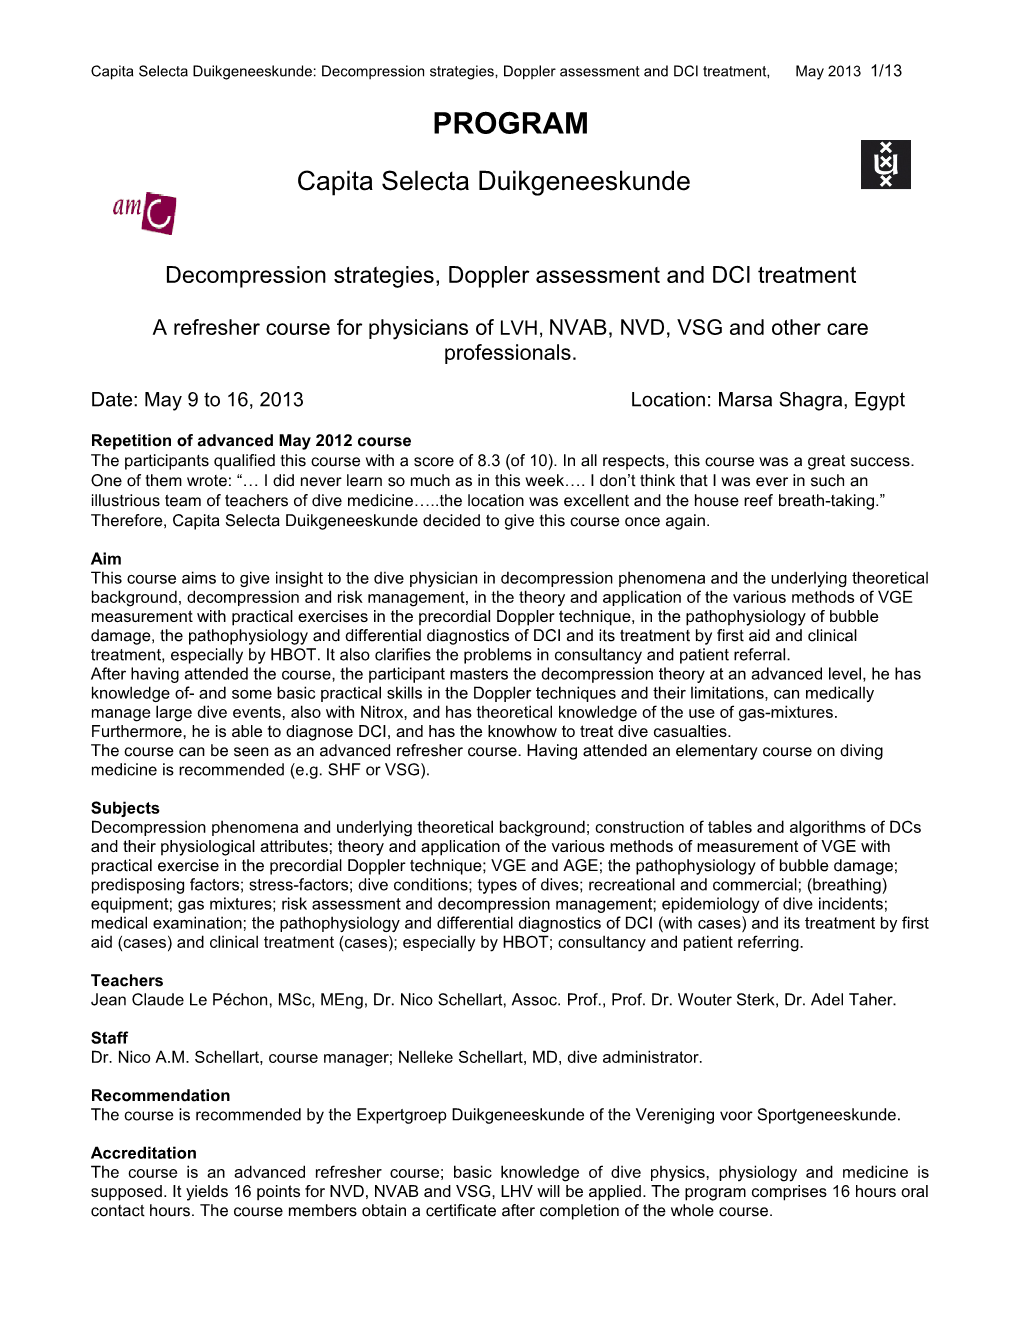 Capita Selecta Duikgeneeskunde: Decompression Strategies, Doppler Assessment and DCI Treatment